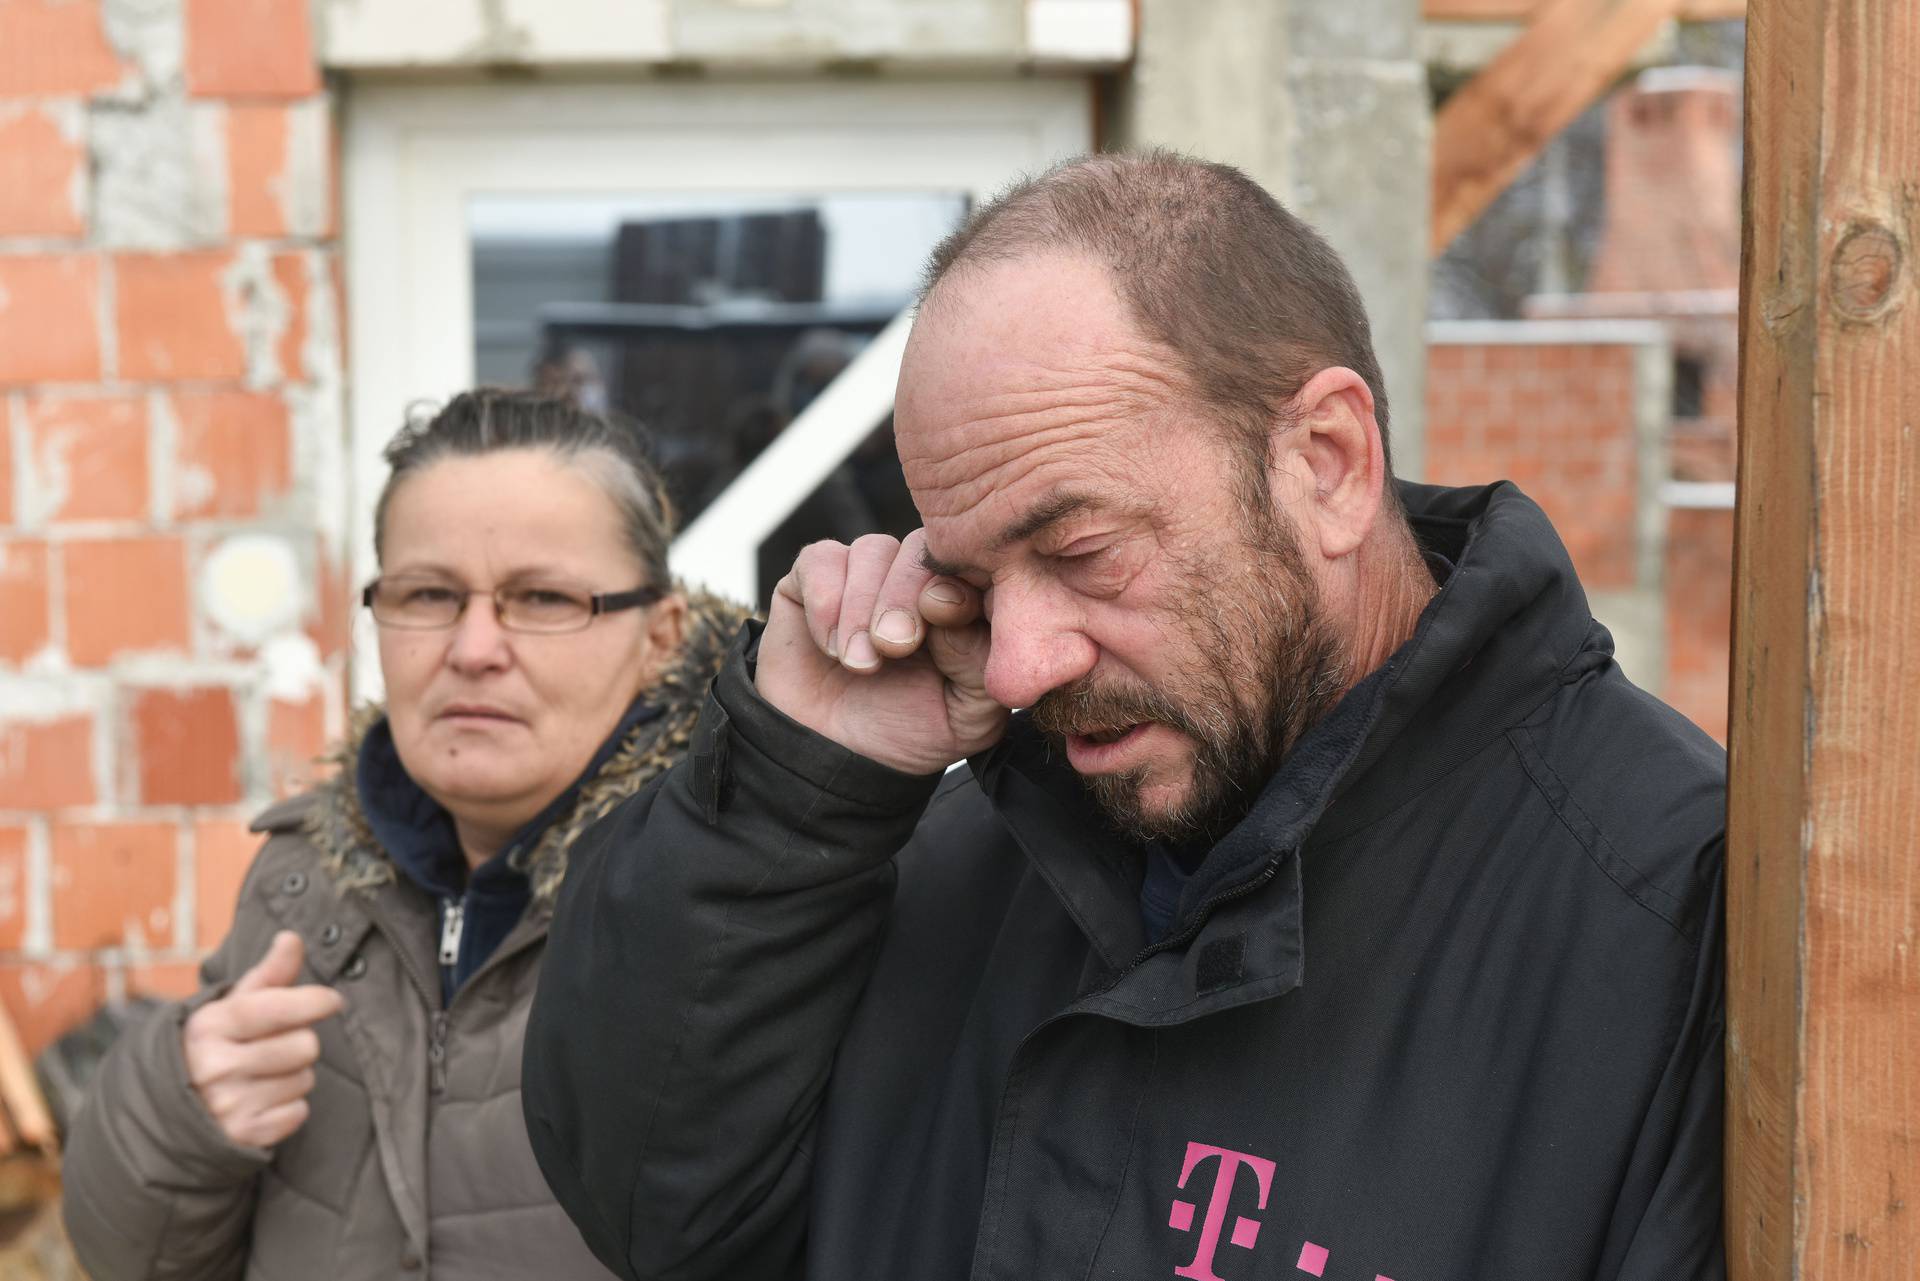 Potres im uzeo dom: S trojkama u kontejneru čekamo Božić